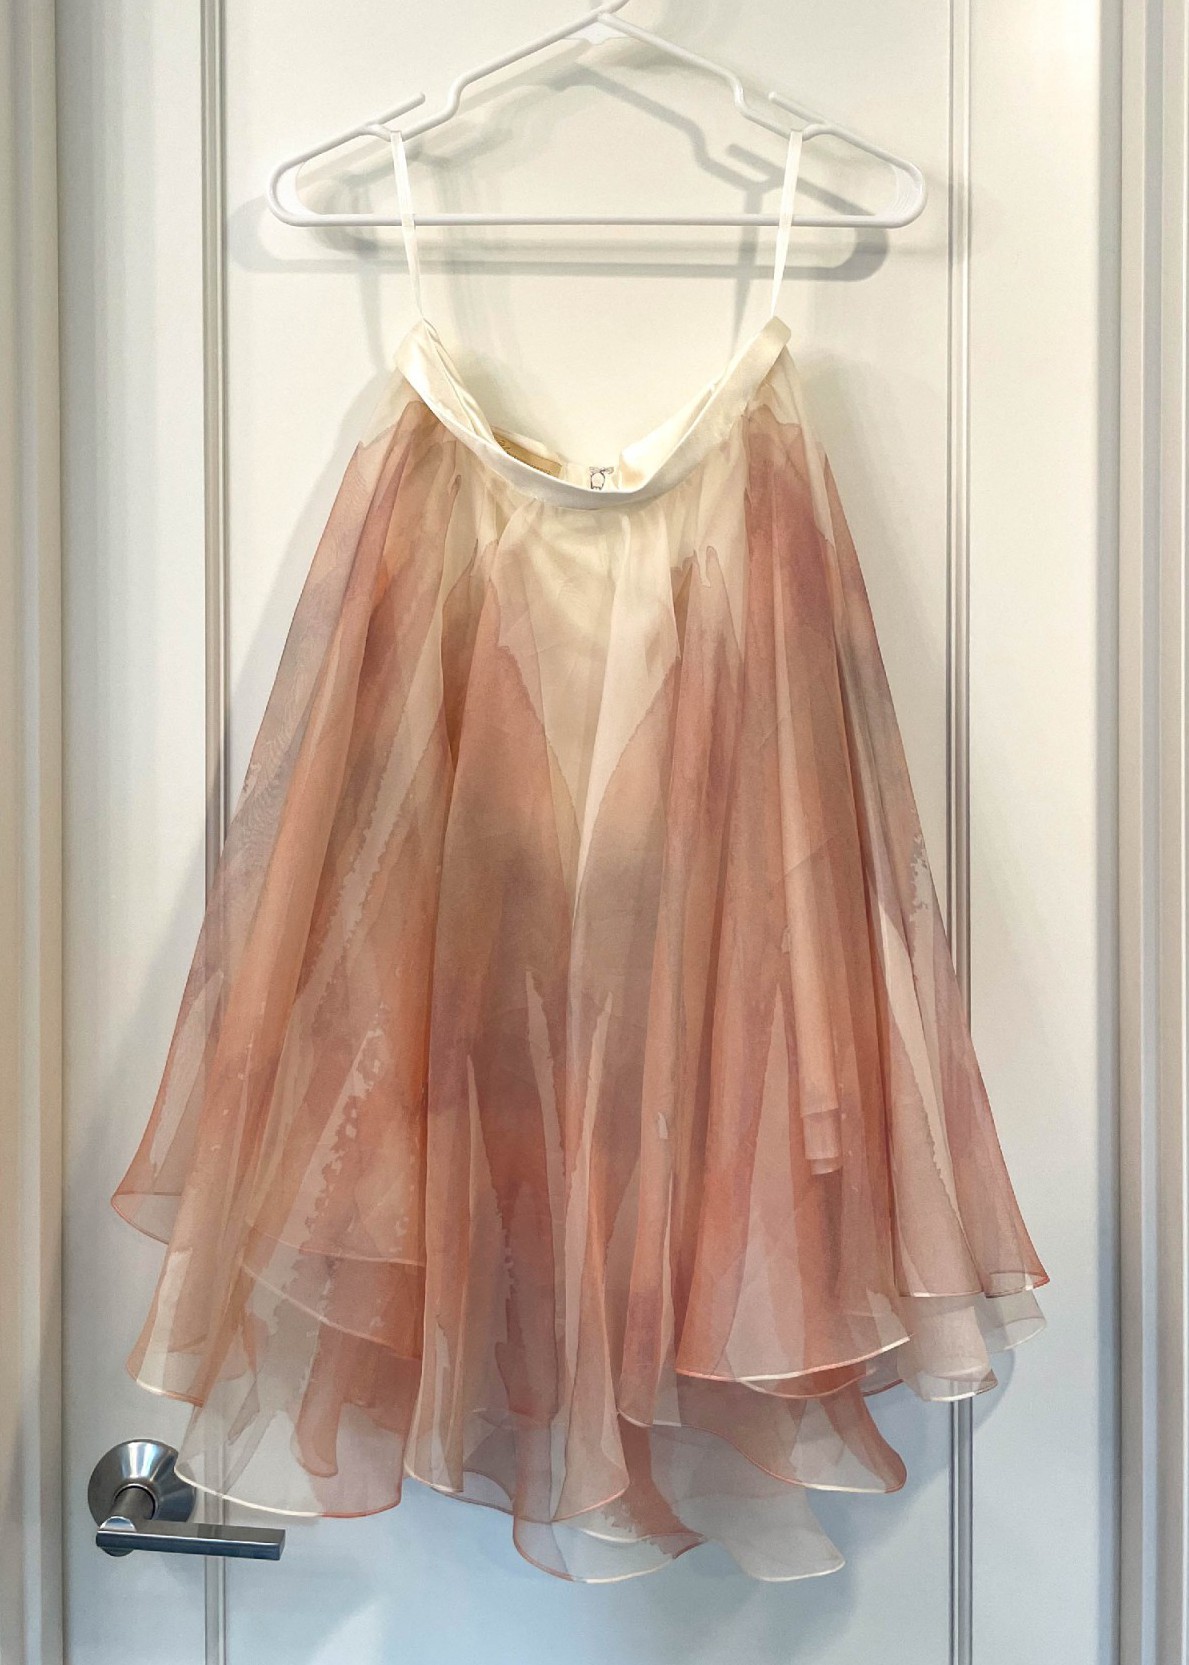 Leanne Marshall Soleil Skirt New Wedding Dress Save 69% - Stillwhite